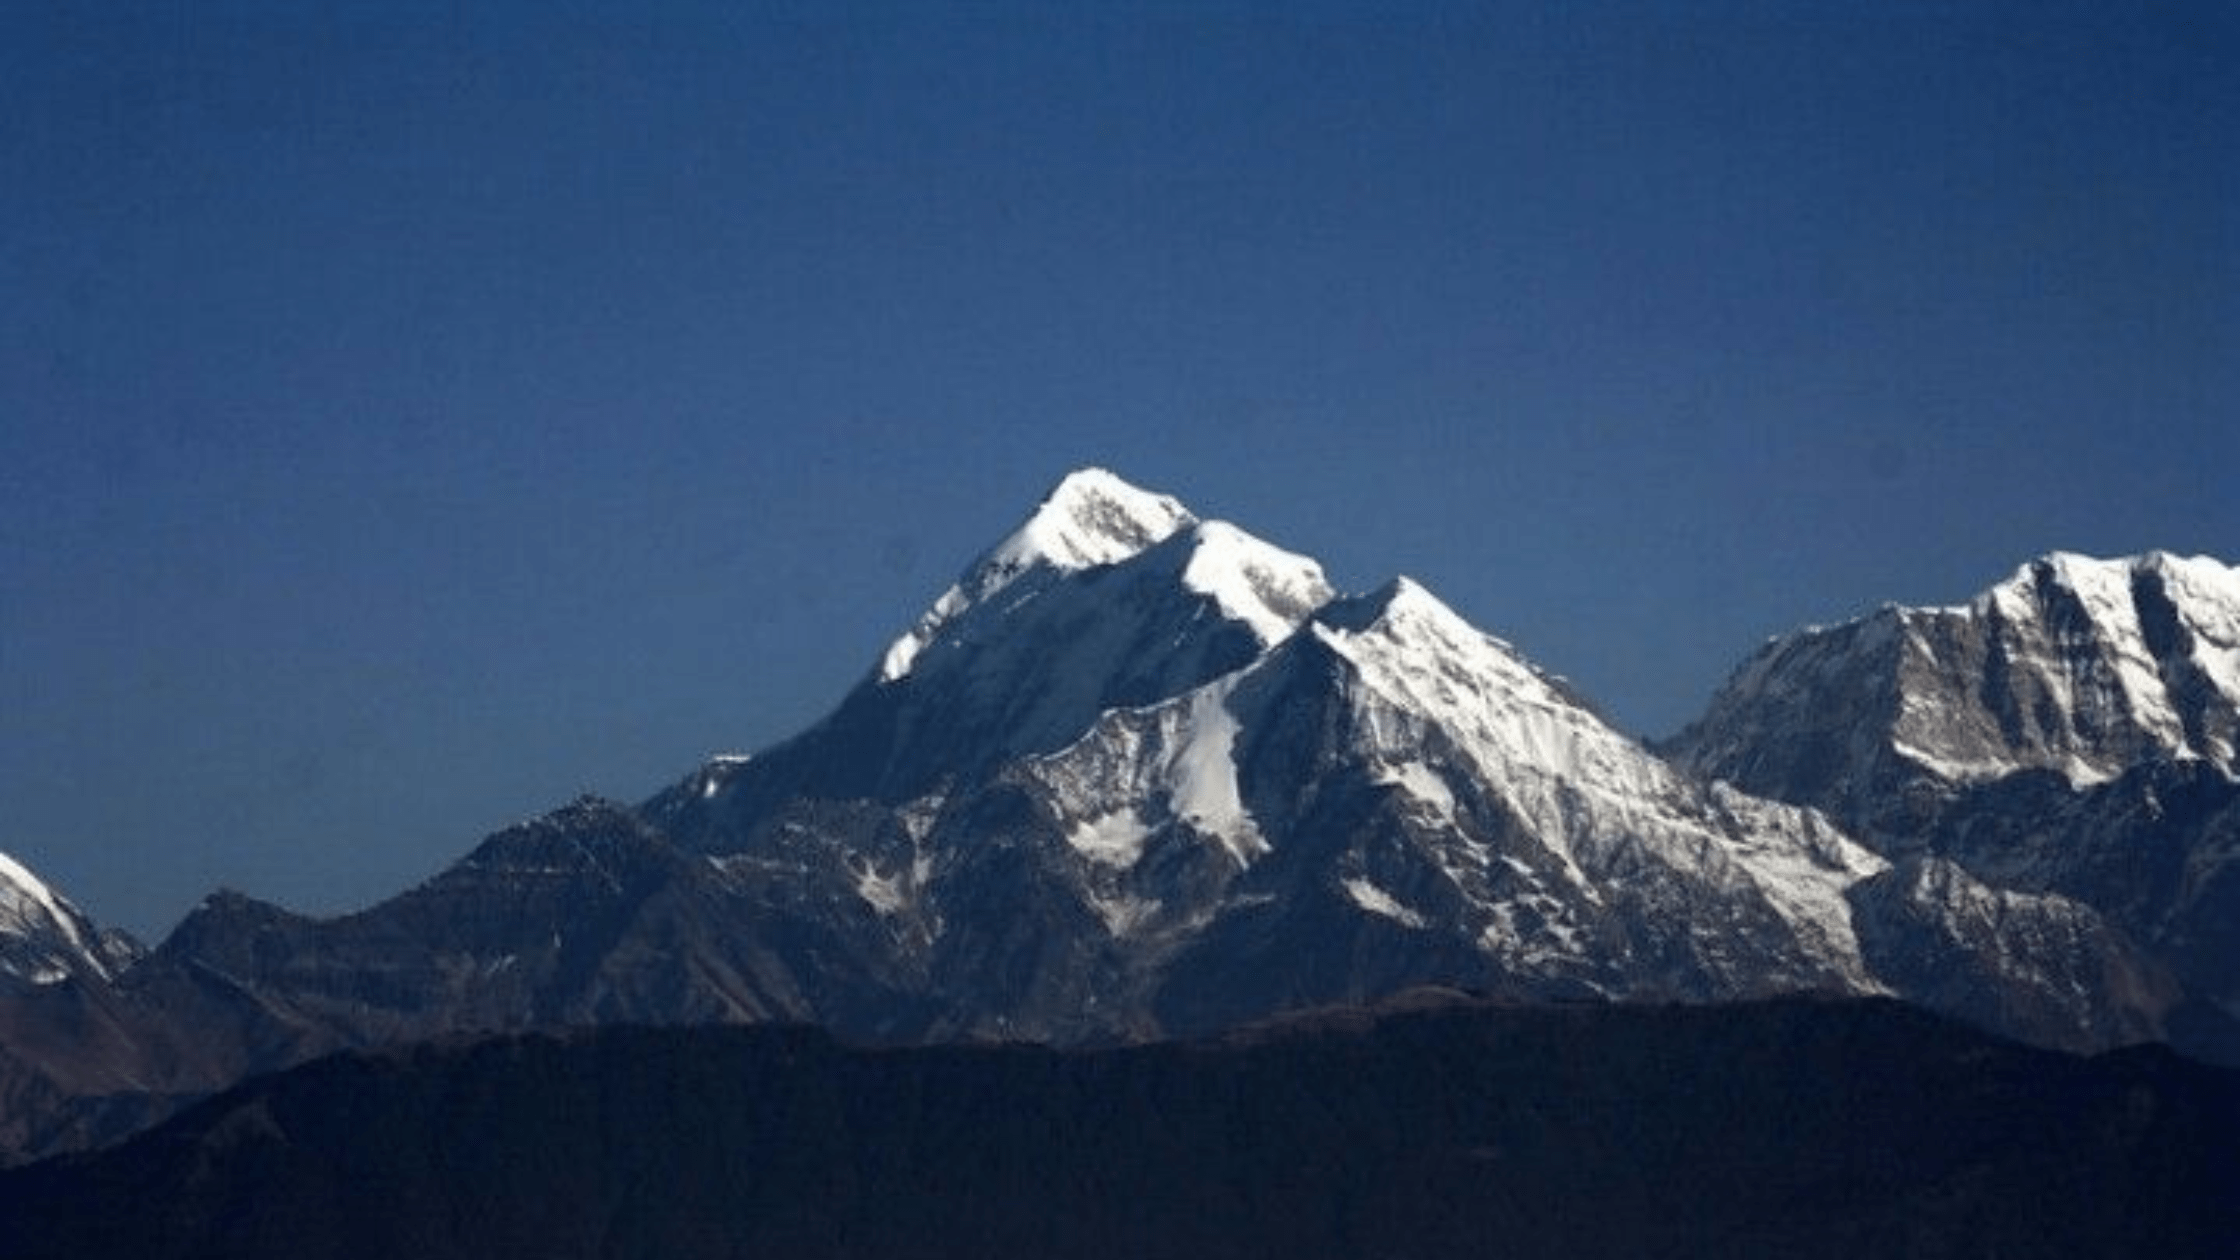 Trisul Mountain Trek: Conquer the Himalayan Beauty